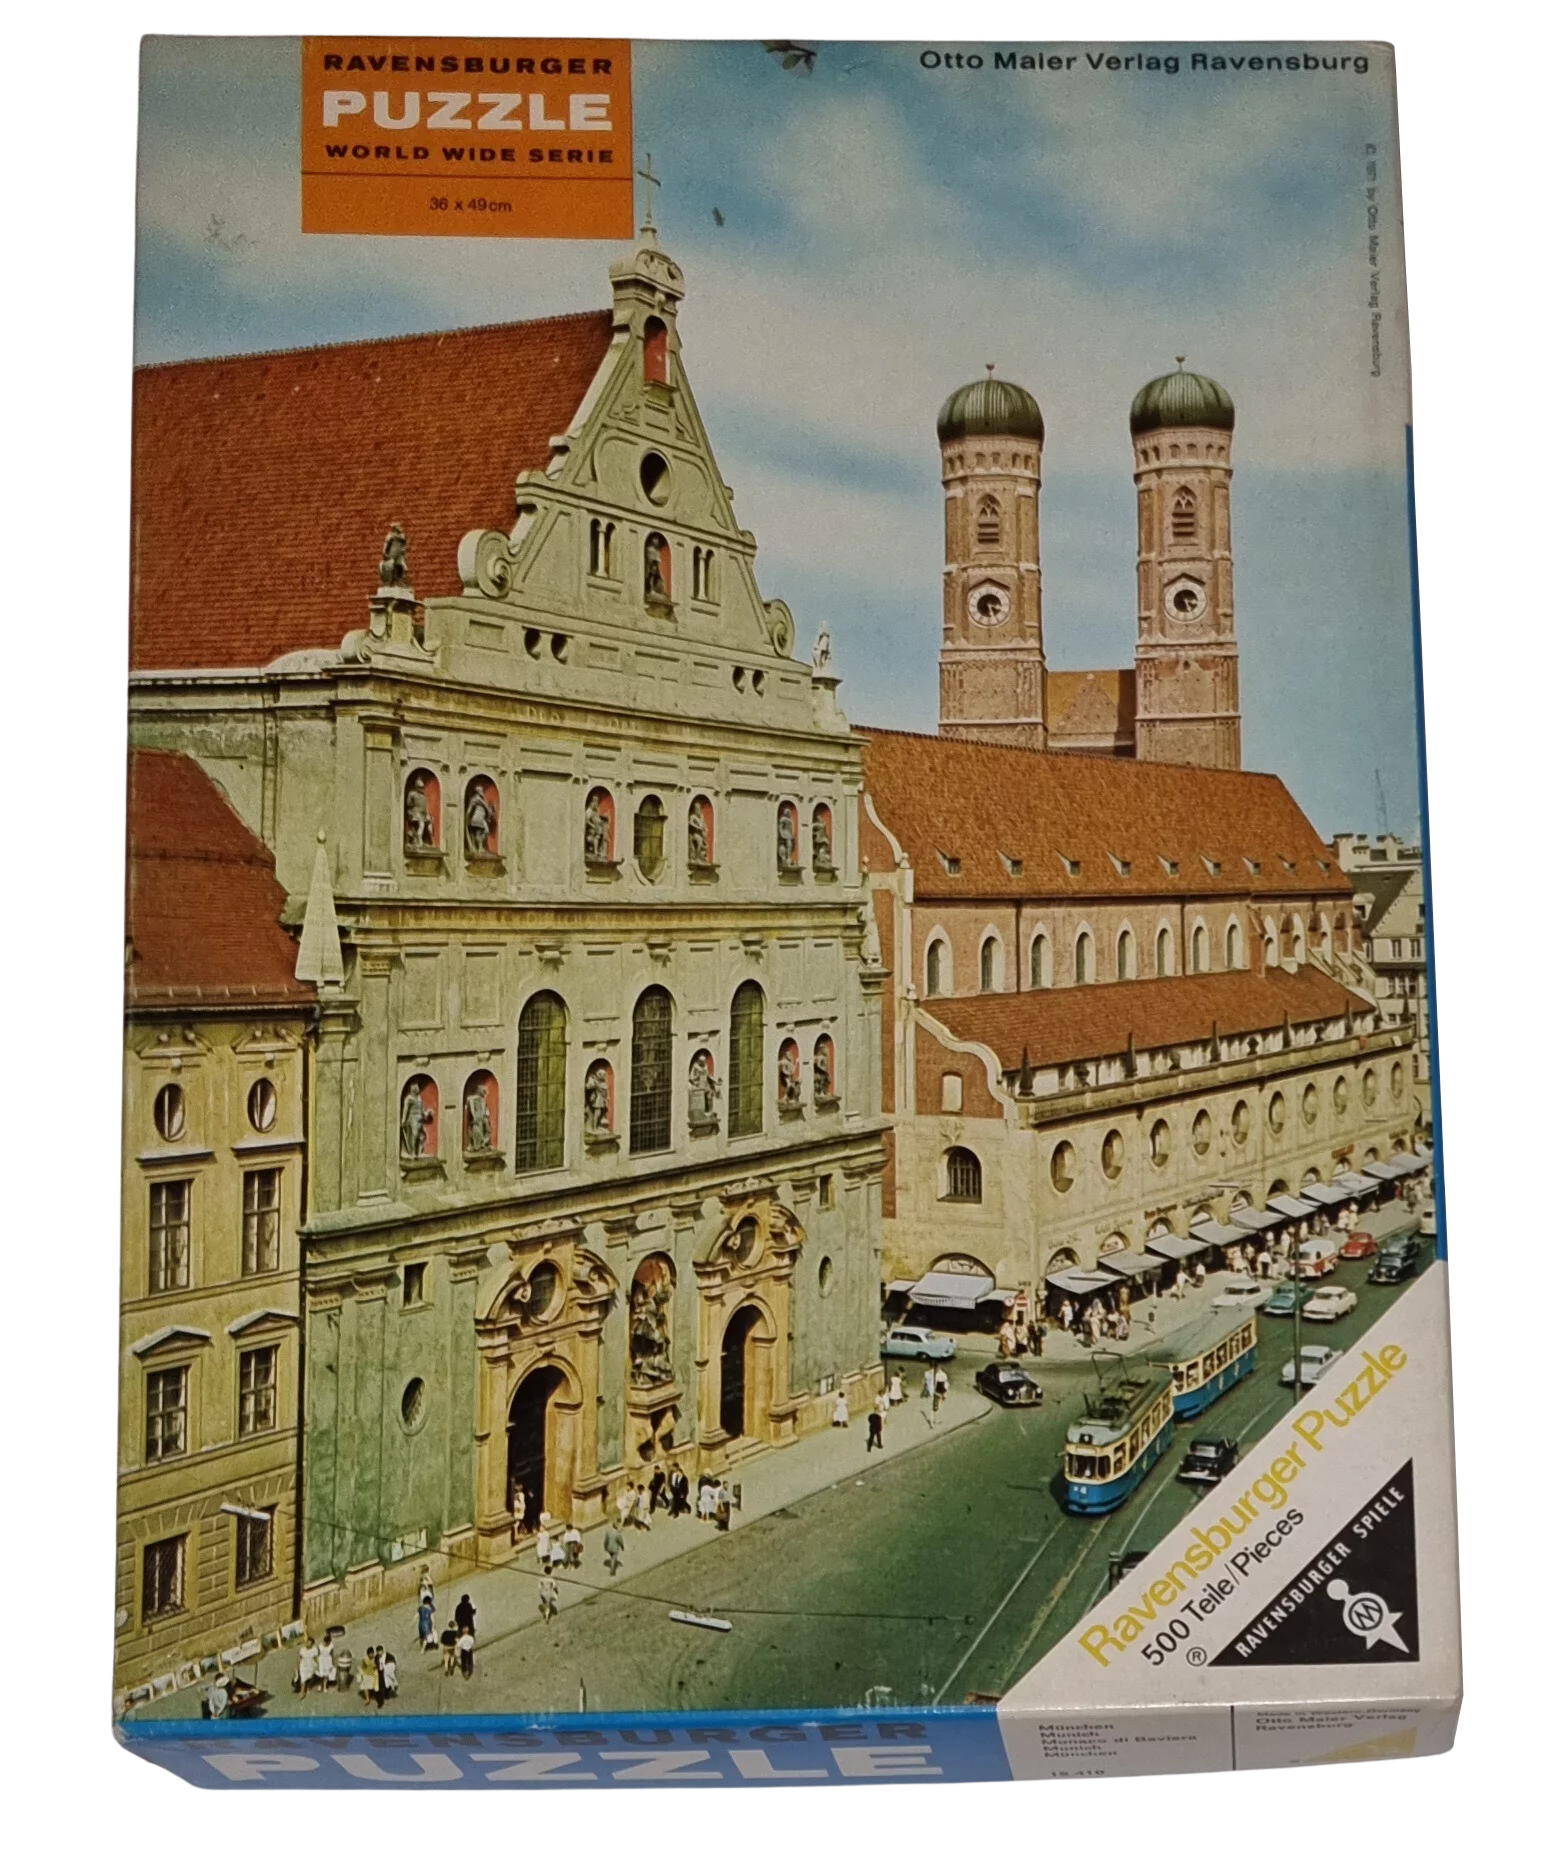 Ravensburger Puzzle World wide Serie München 15.410